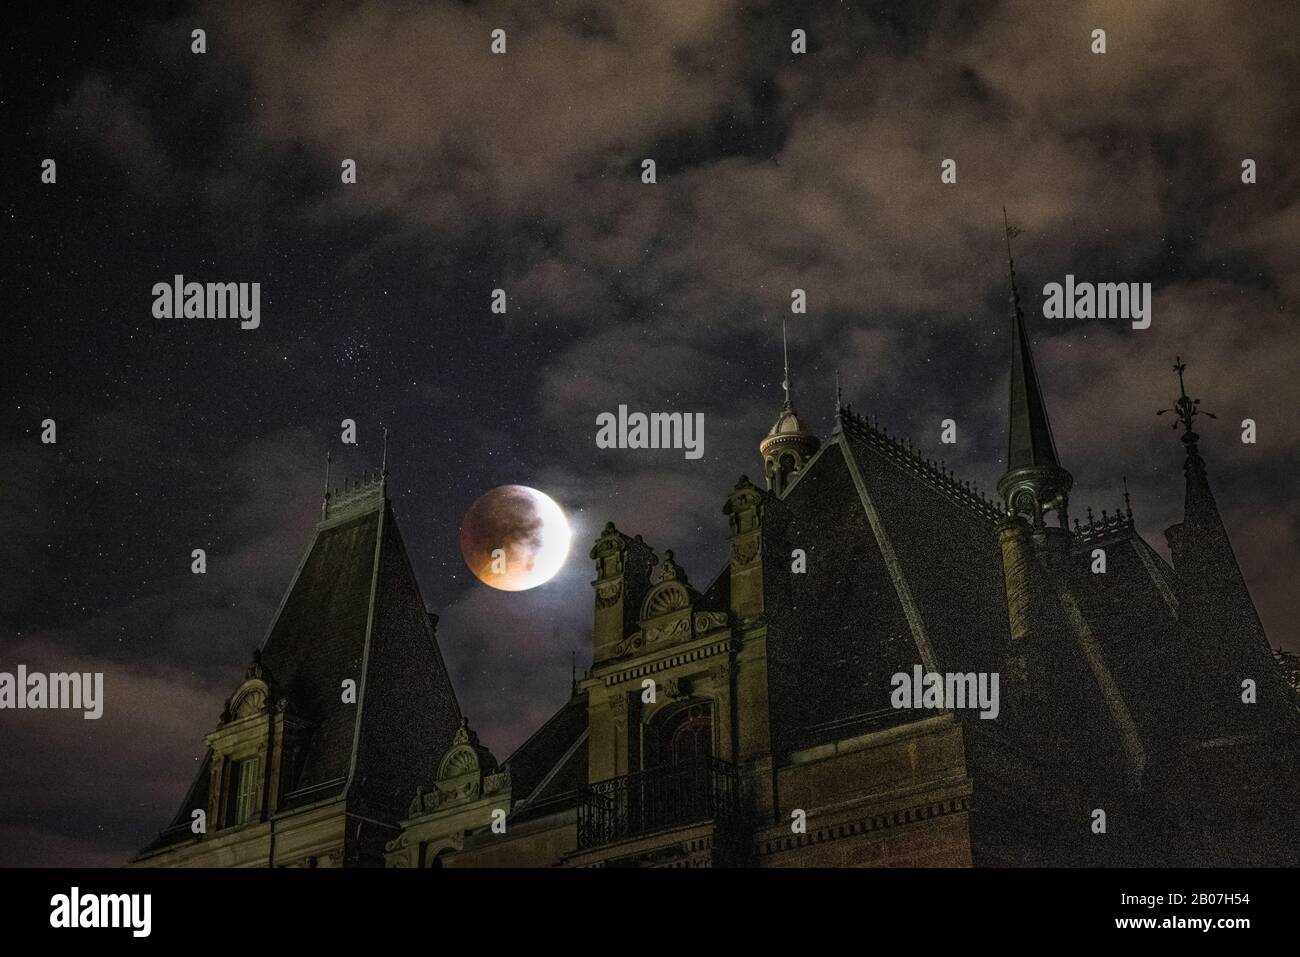 Lunar eclipse / blood moon 21.1.2019 with Hünegg Castle in Hilterfingen Switzerland Stock Photo